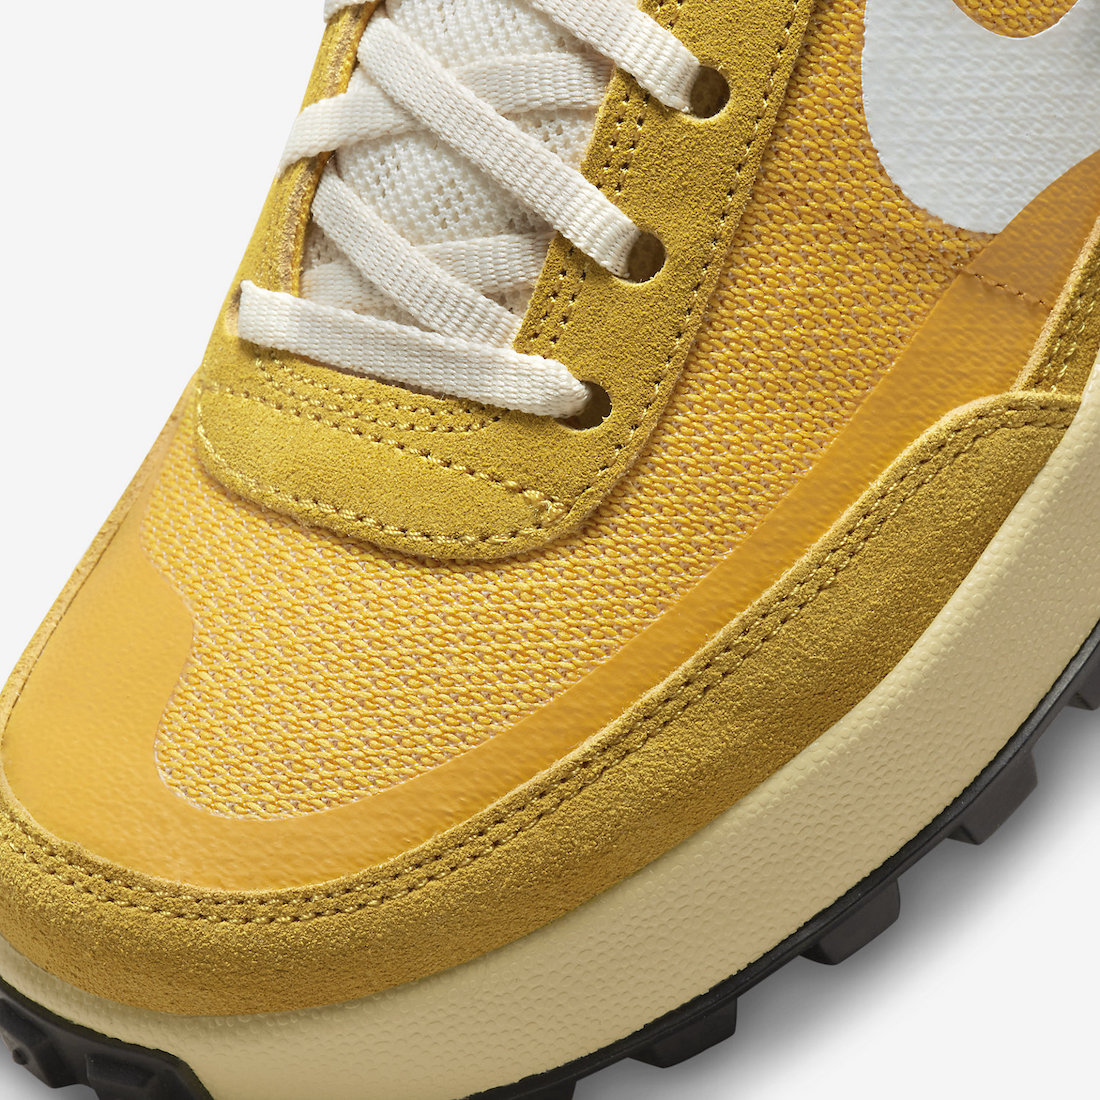 Tom Sachs NikeCraft General Purpose Shoe Yellow DA6672-700 Release Date